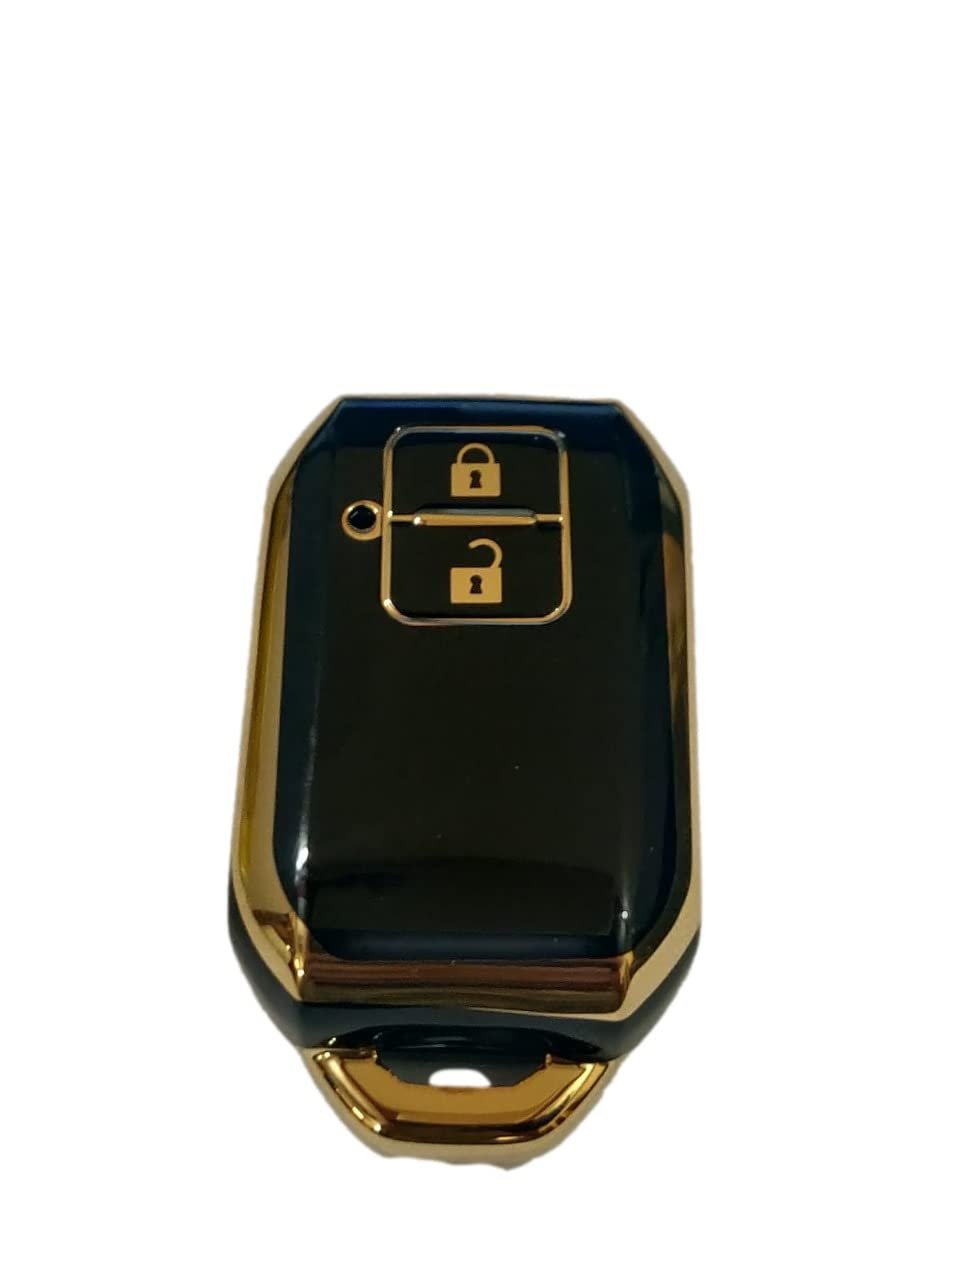 Carbon TPU Key Cover Compatible for Suzuki Baleno, XL6, Swift, Ertiga, Dzire (2 Button Smart Key,Gold/Black) Image